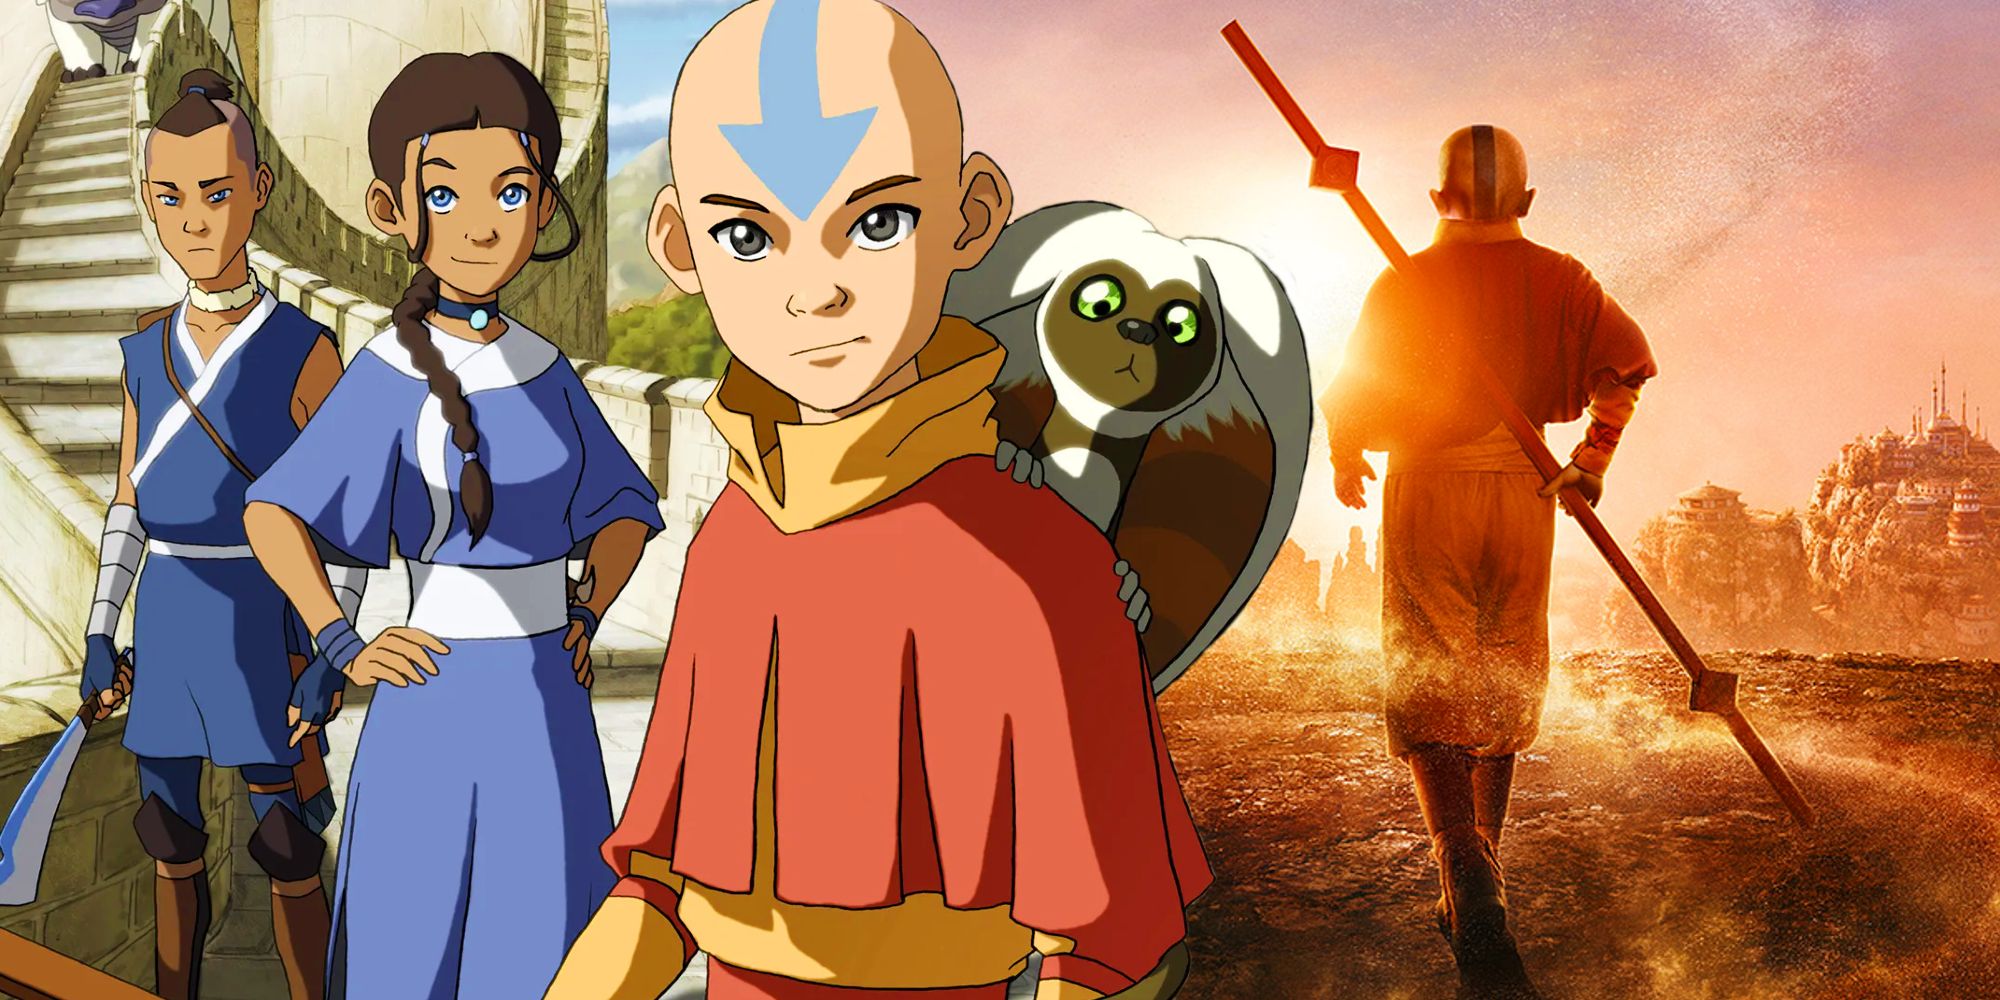 Last Airbender de Netflix se burla del peor episodio del programa Avatar original